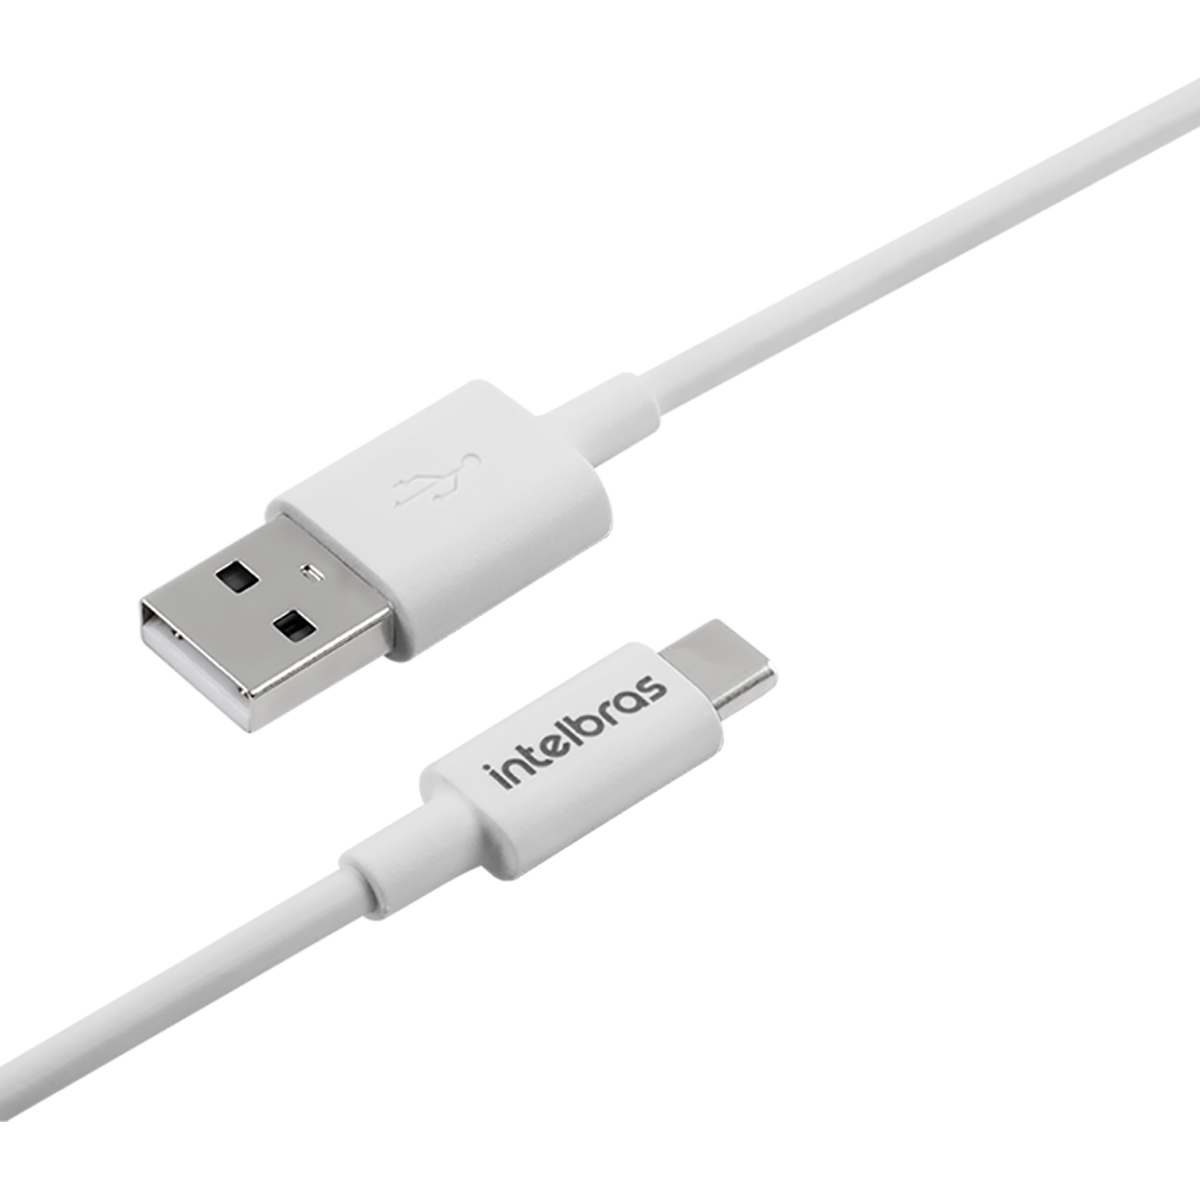 Cable USB para USB-C EUAC 12PB